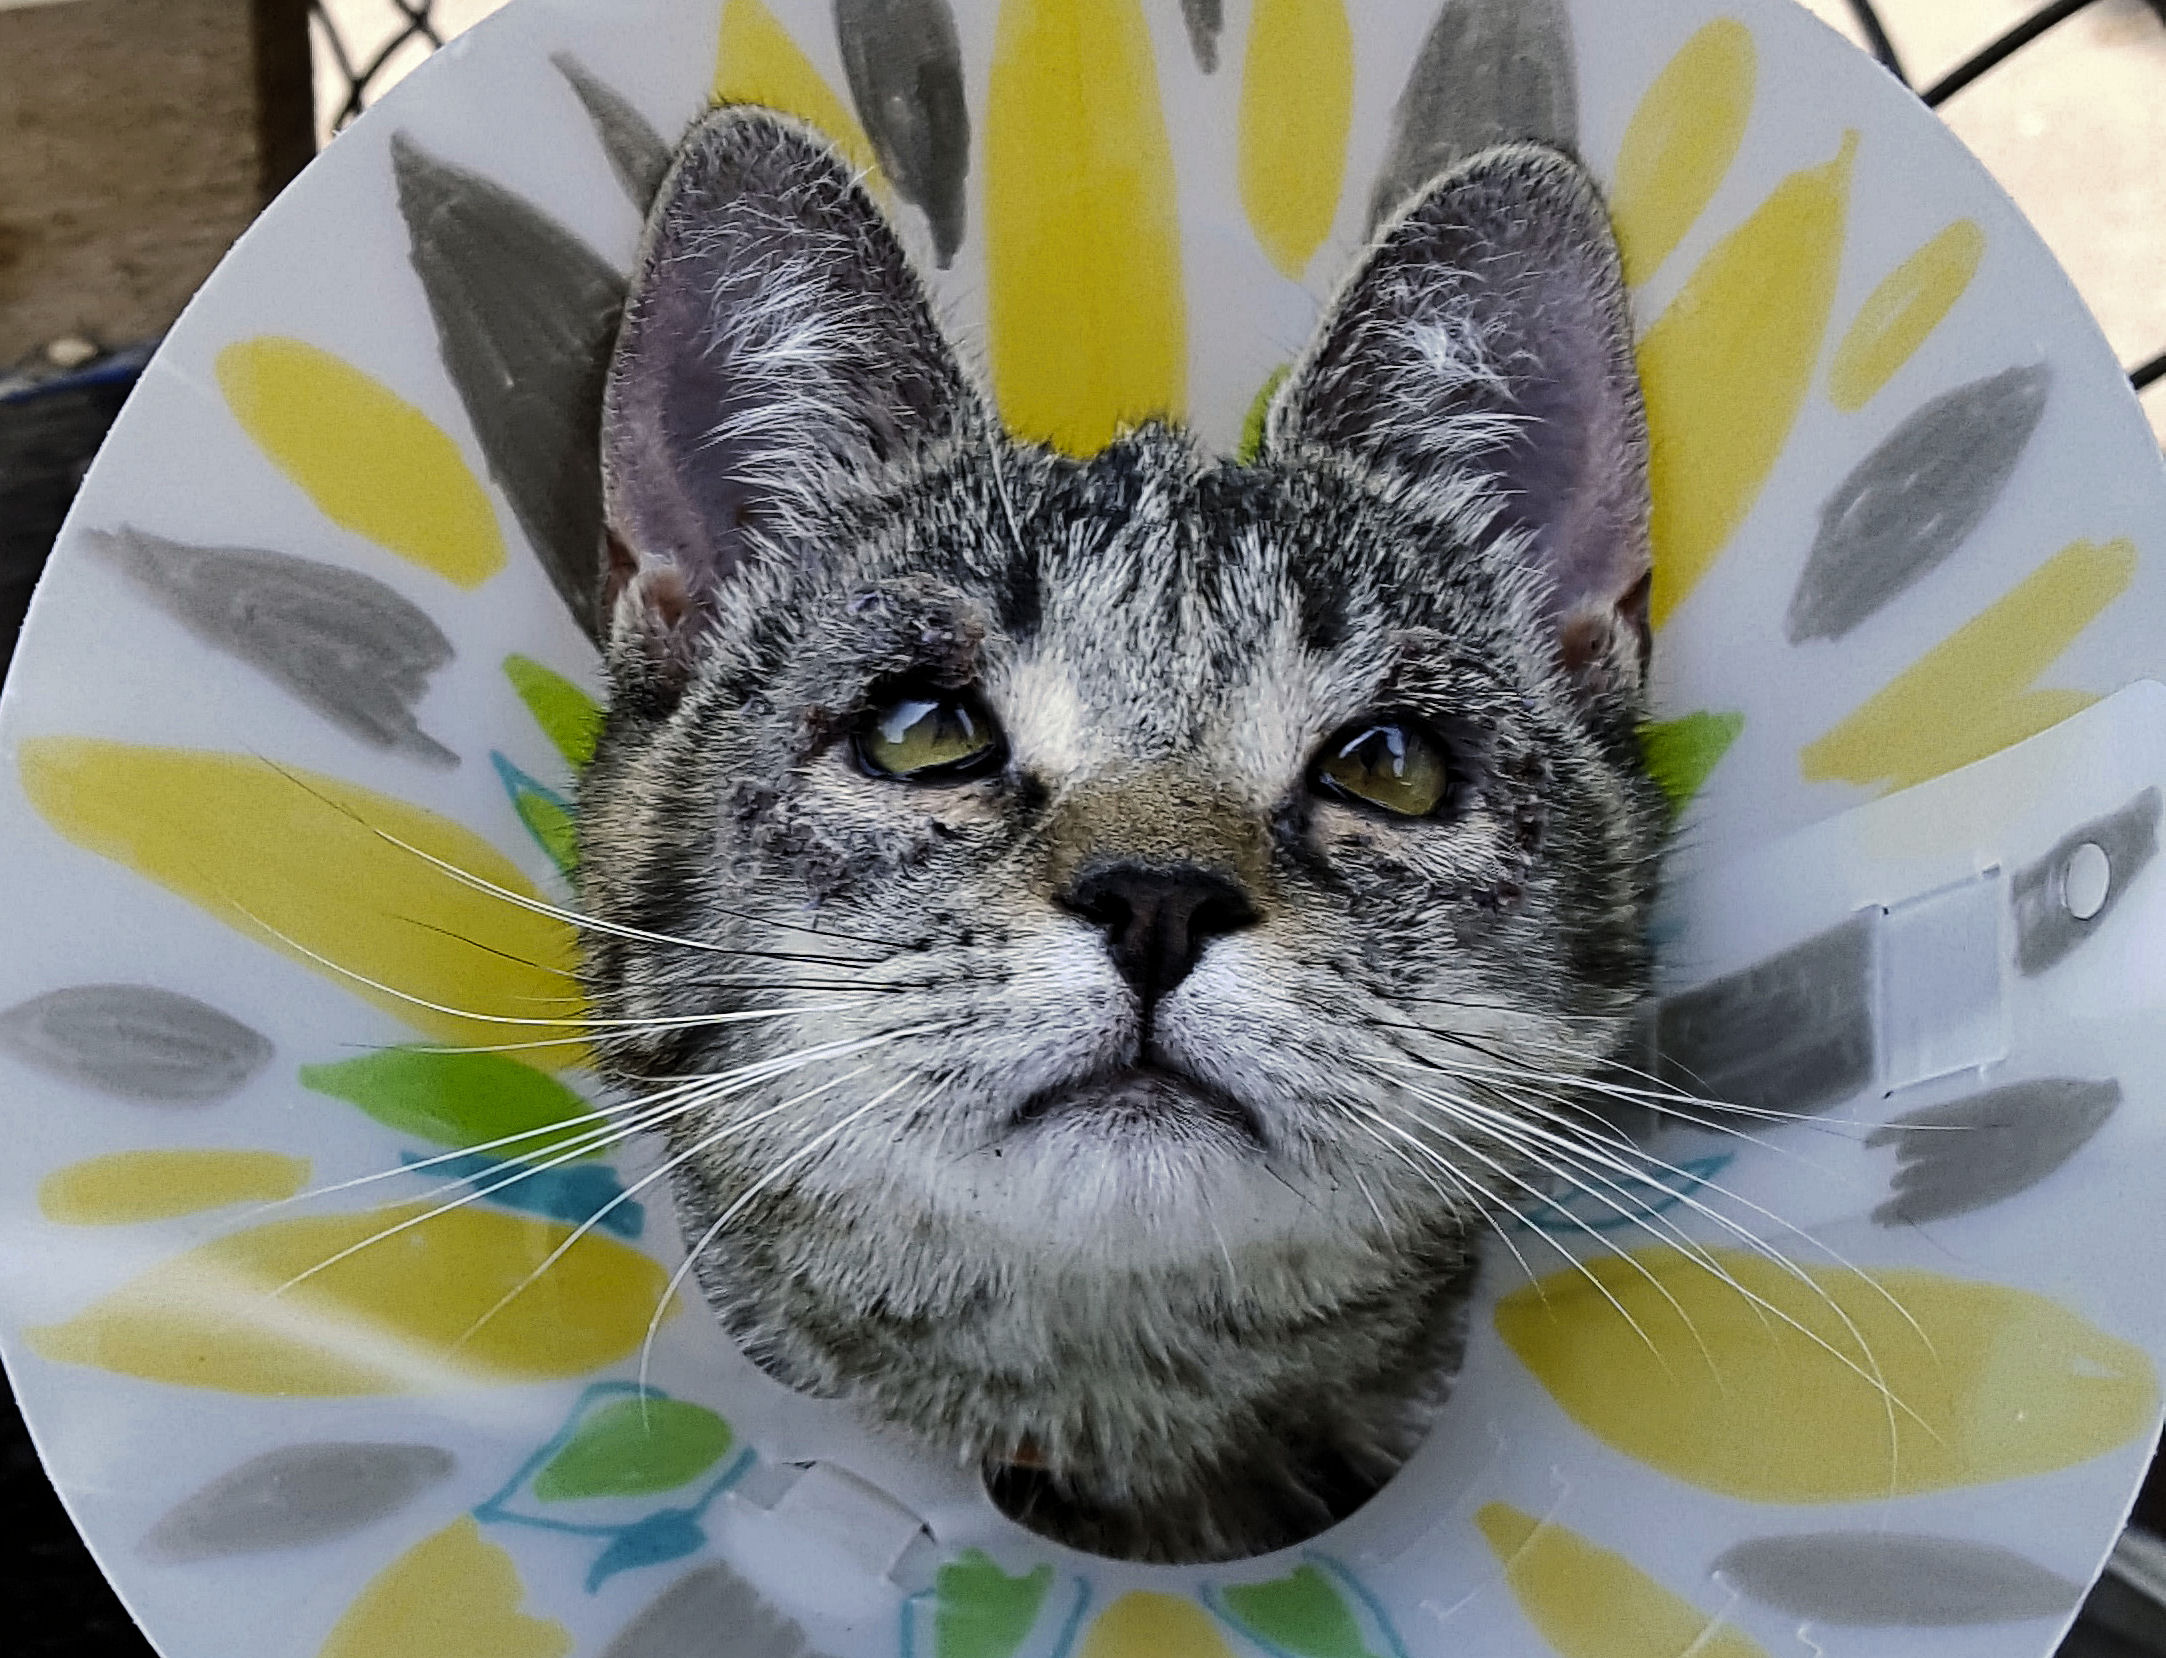 Jersey Kitten Named Cat Champ, Doesn't Care